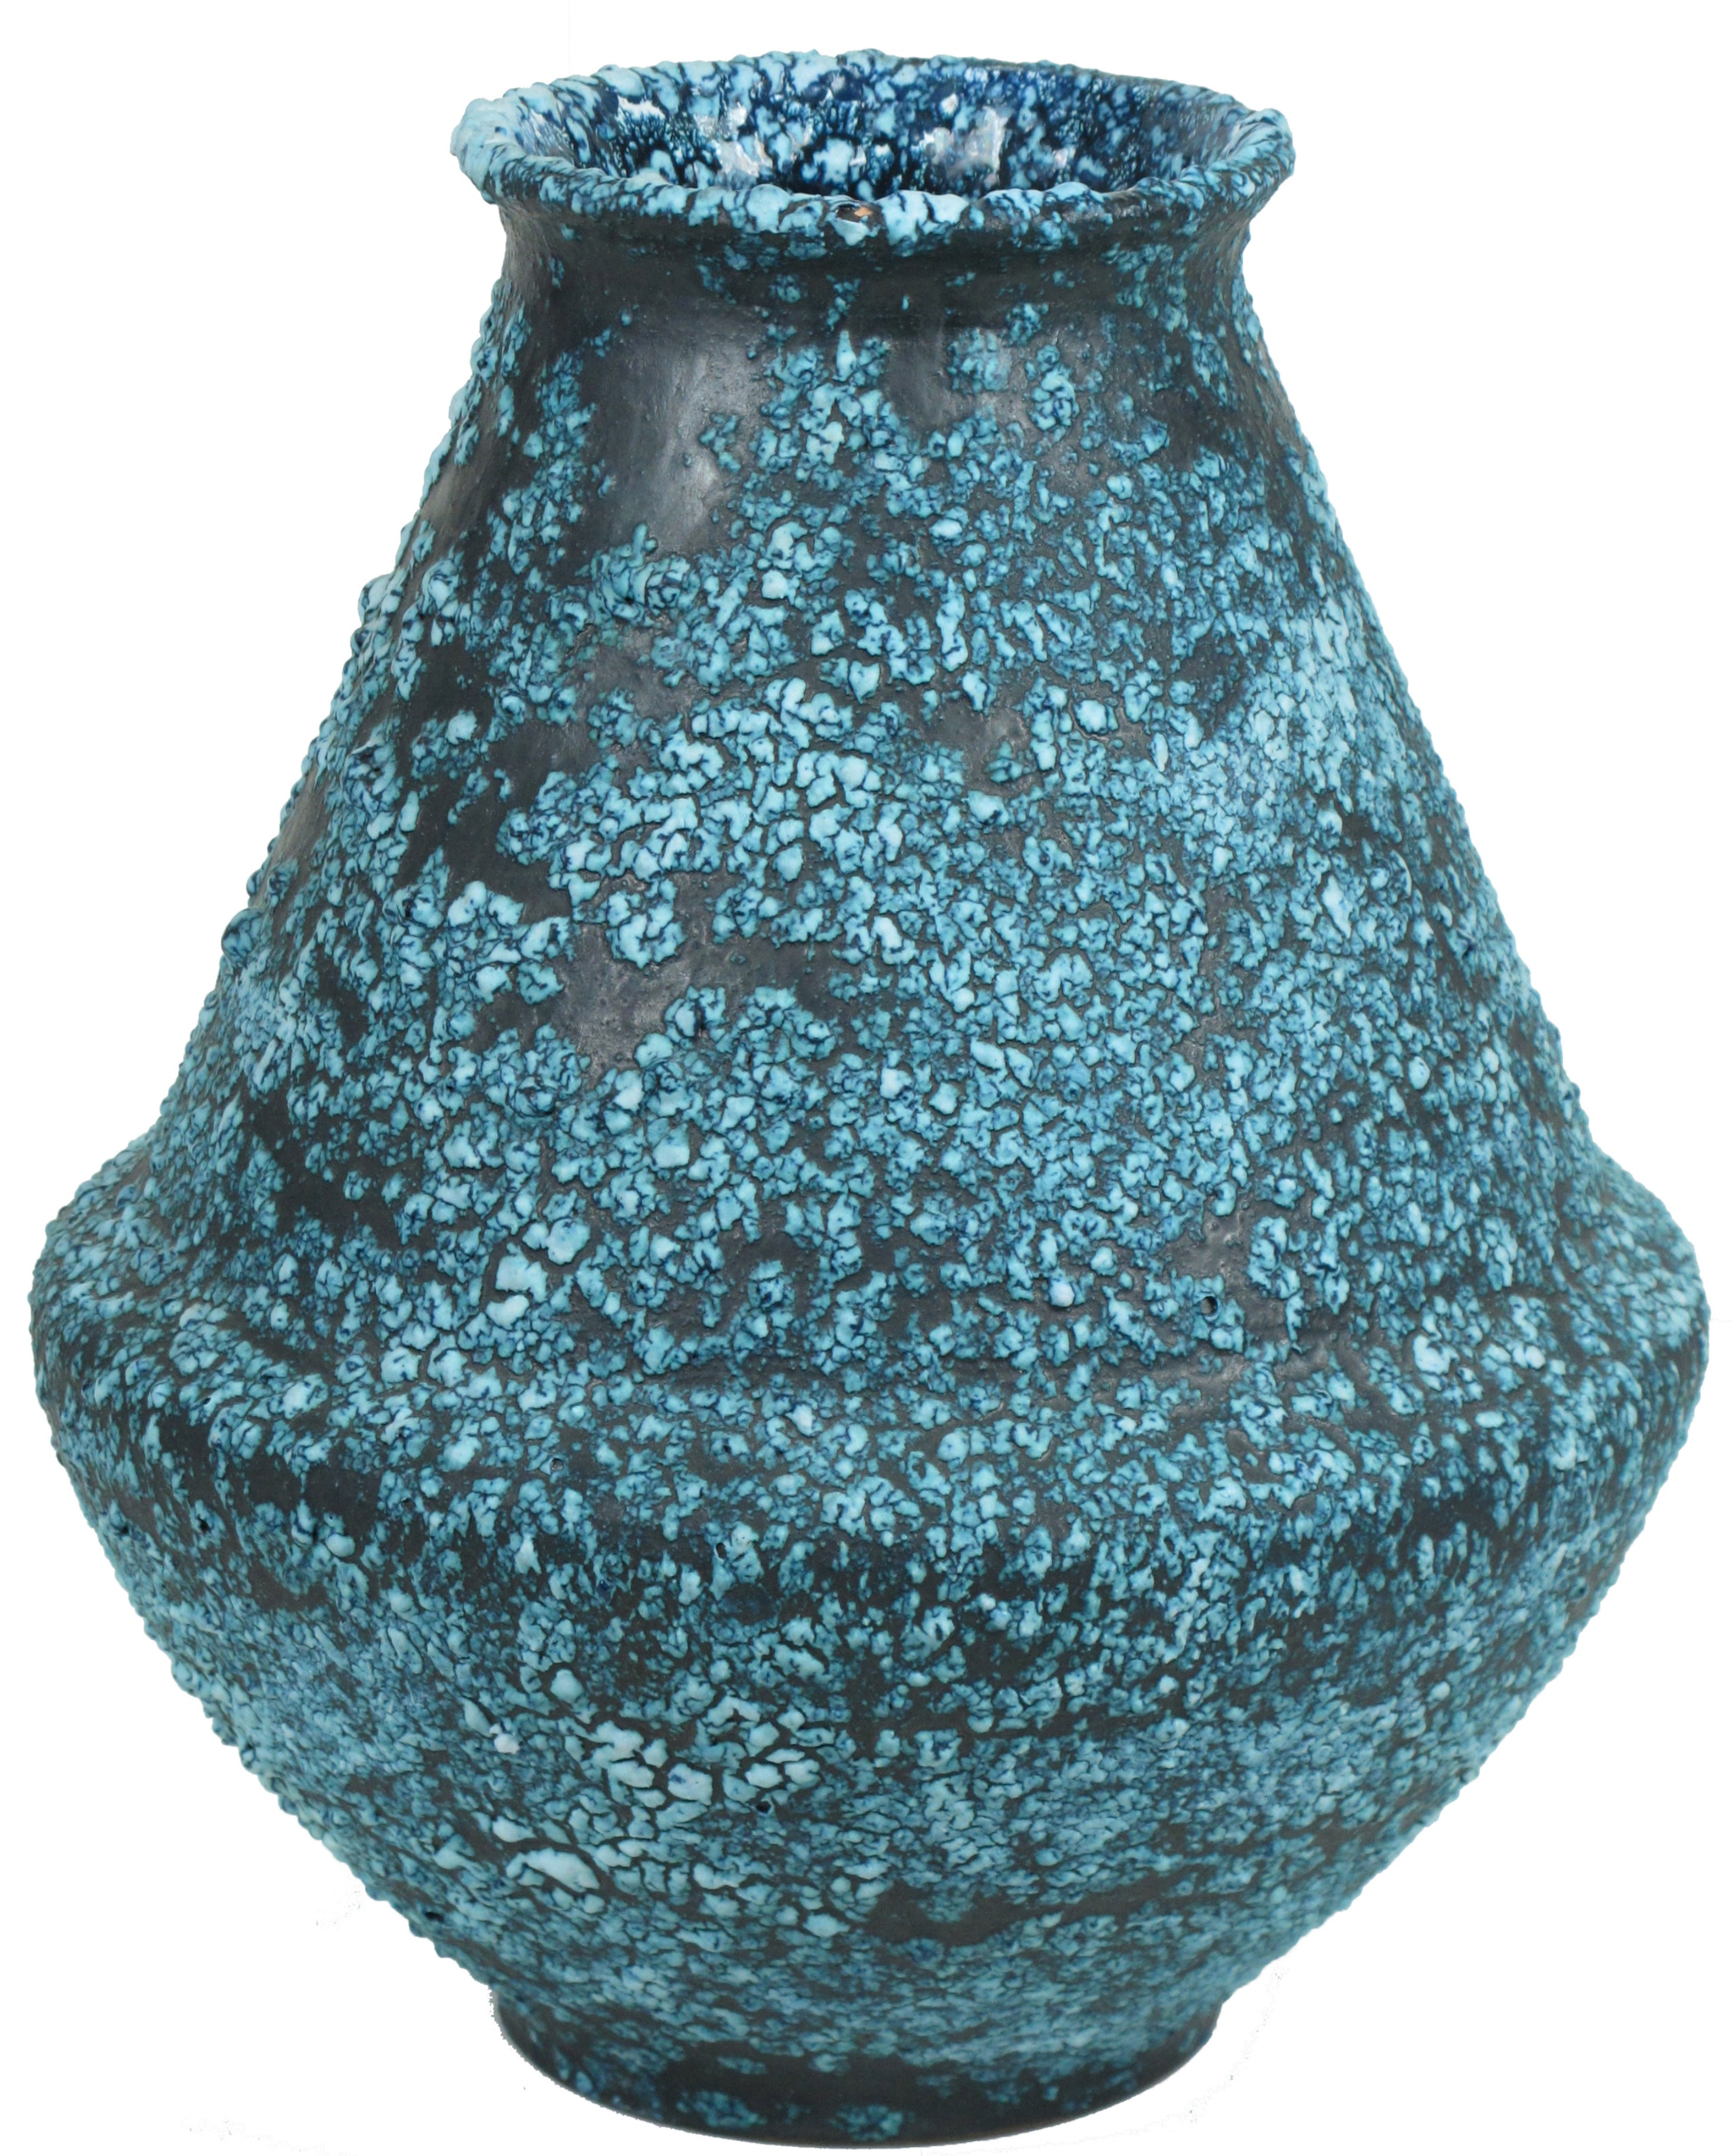 Ceramic Vase with Pebbled Blue and White Glaze after Fantoni